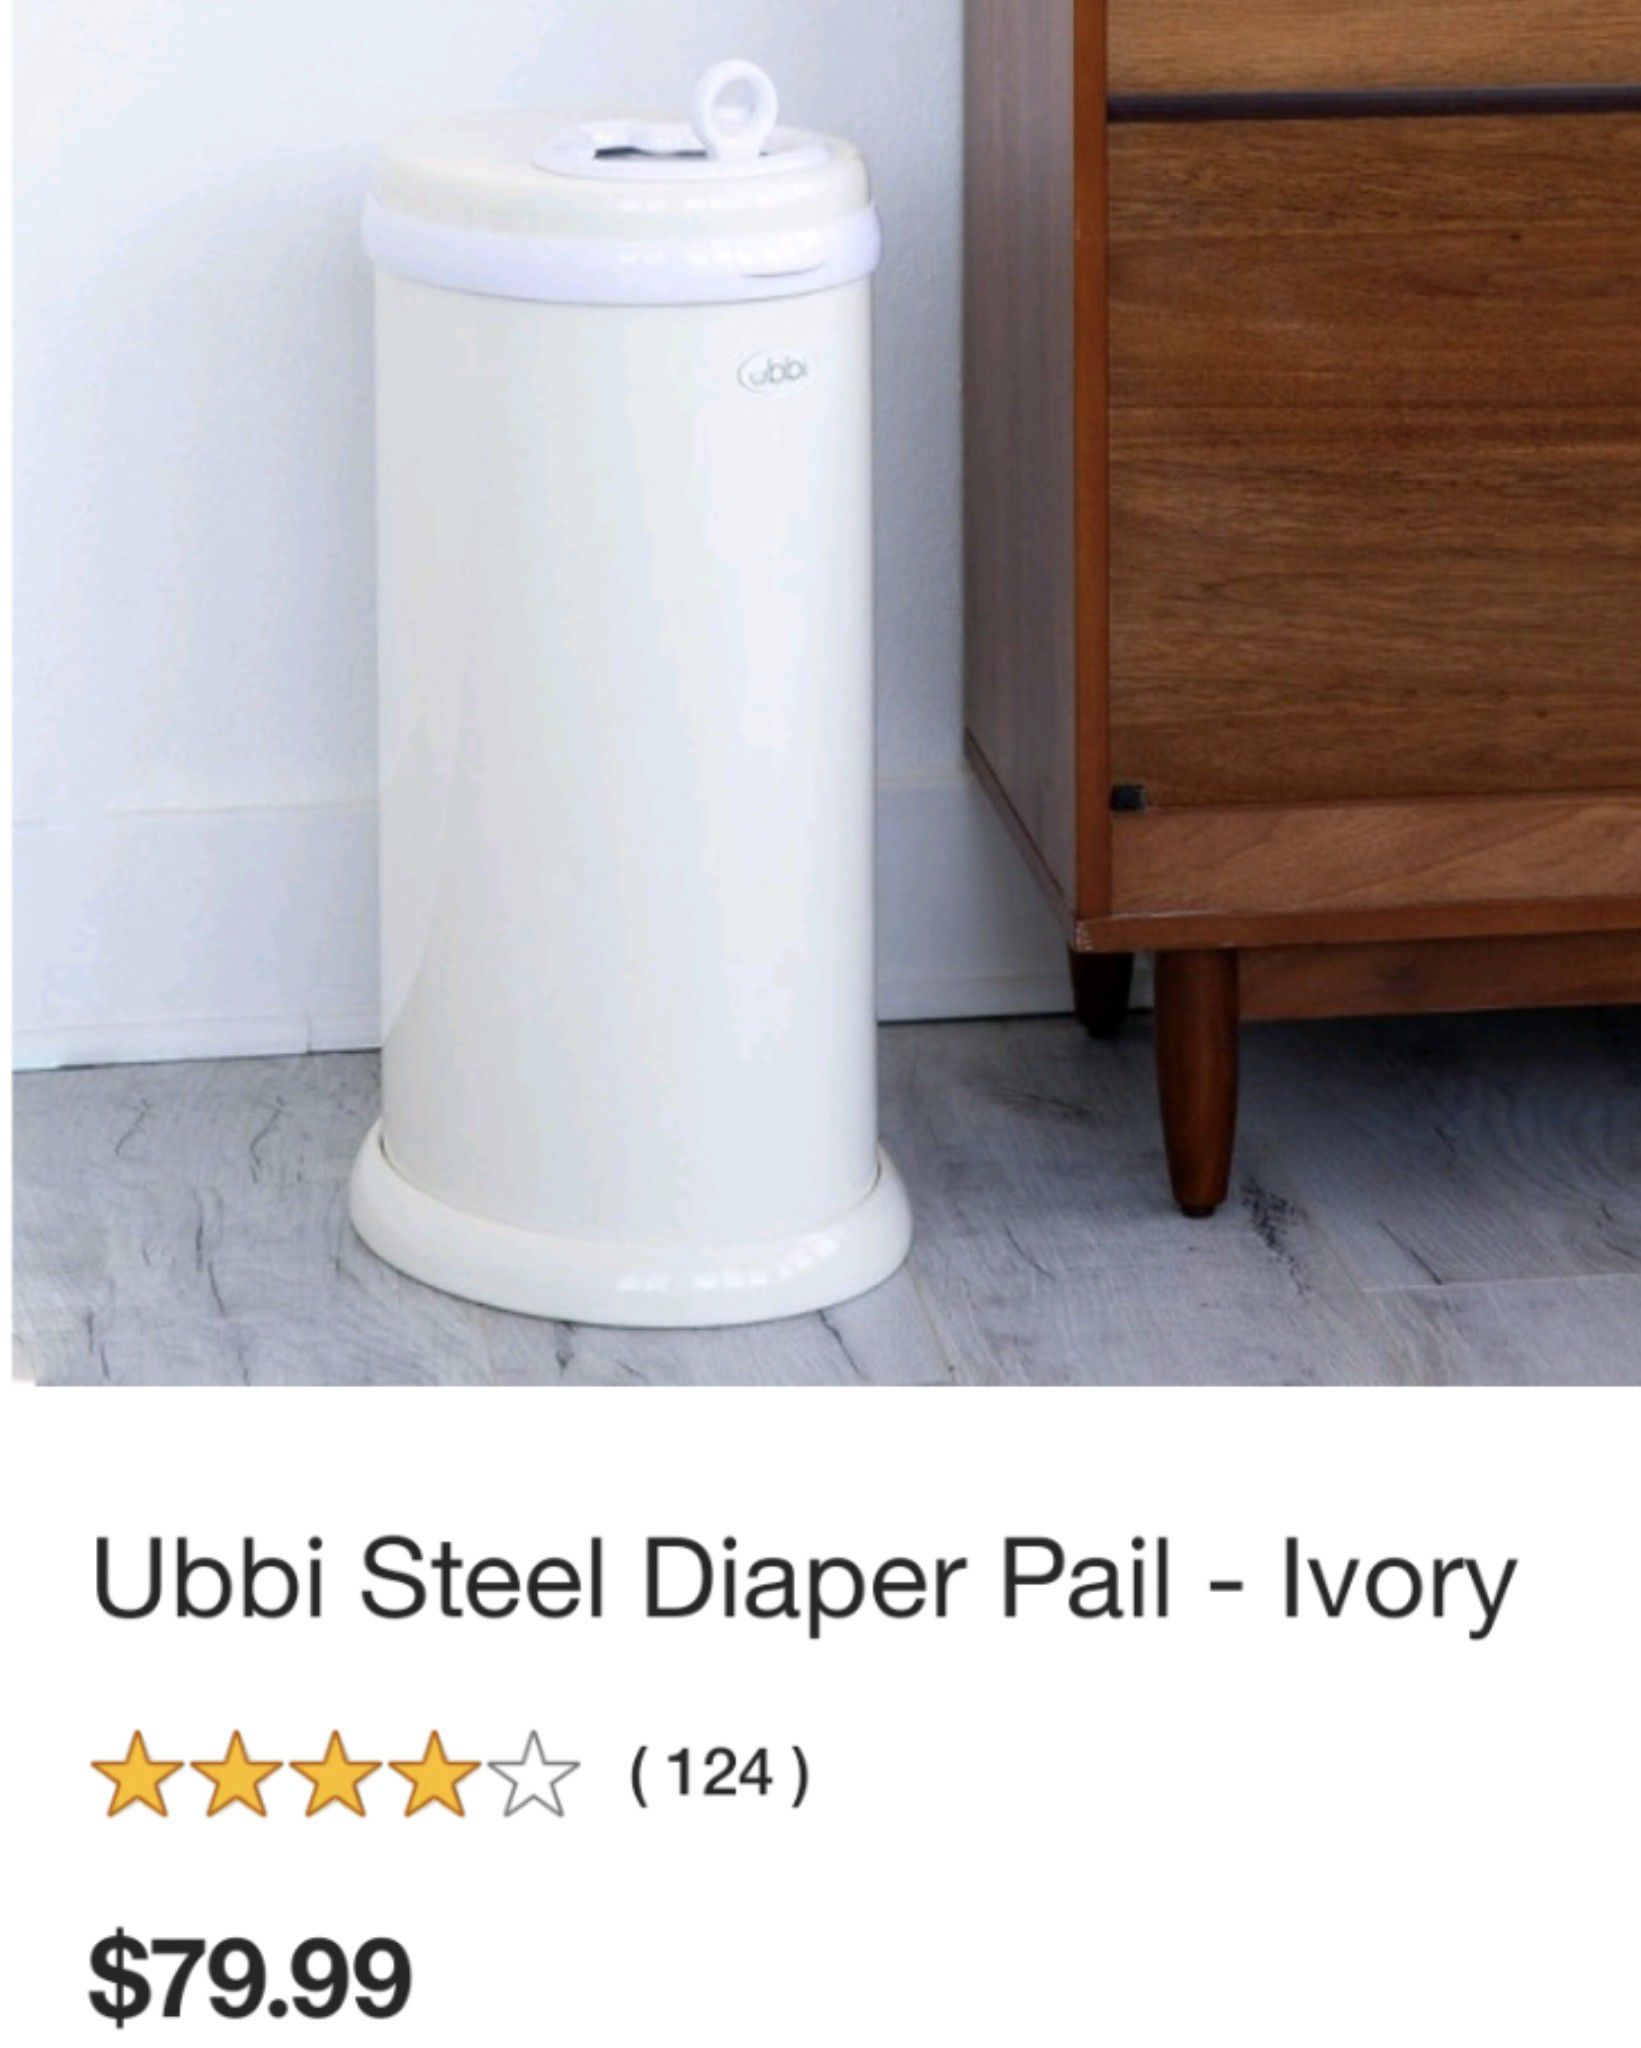 ✨BRAND NEW IN BOX✨ Ubbi Steel Diaper Pail -Ivory